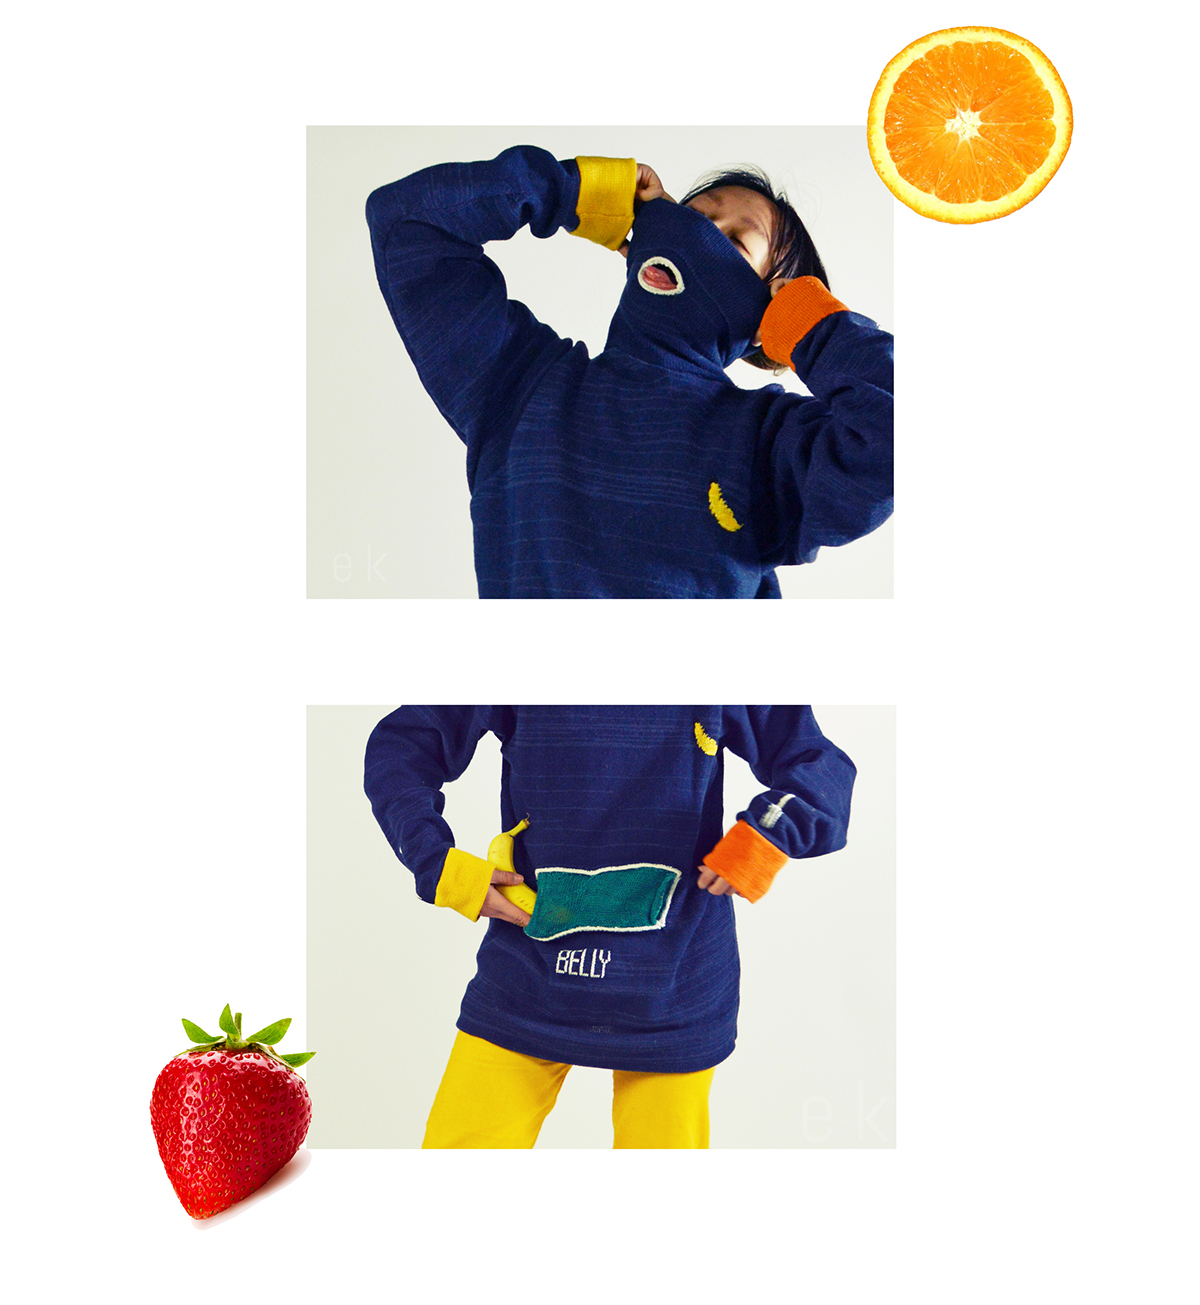 Food  Fun yufei Erica sweater machine knit single bed Fruit banana turtleneck apparel